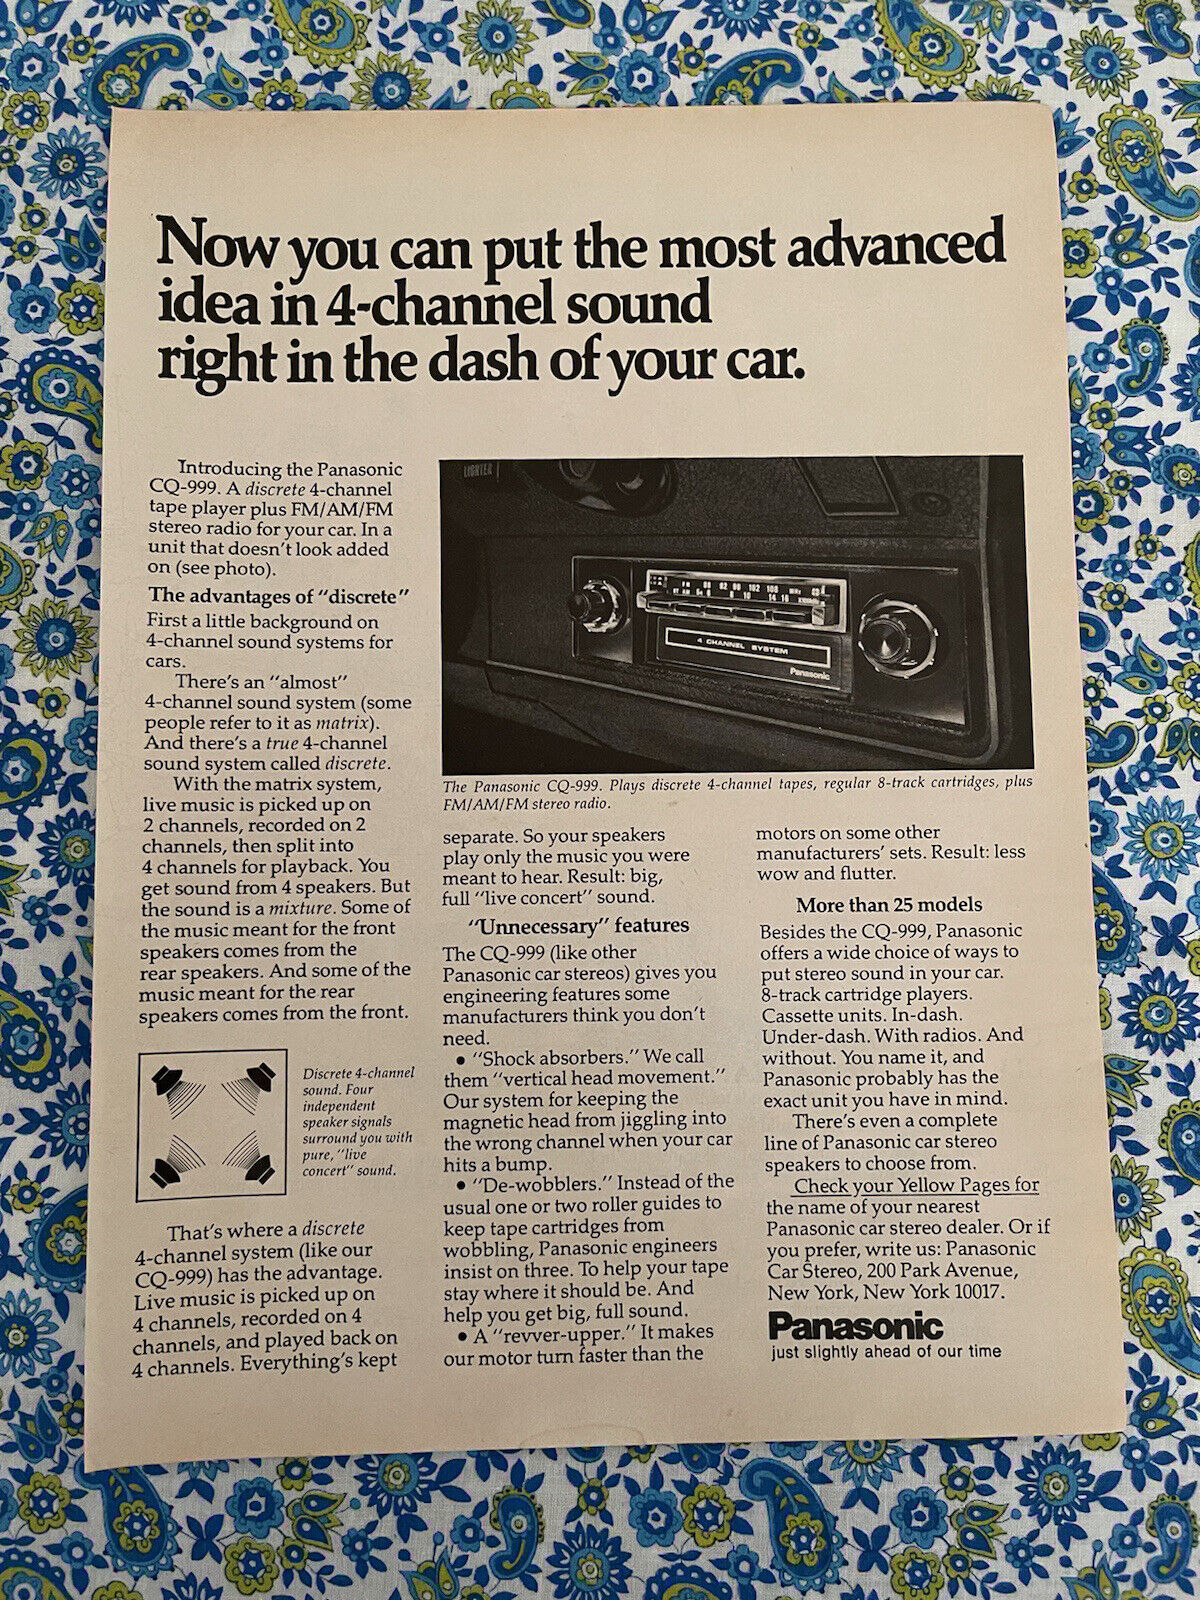 Vintage 1974 Panasonic Print Ad In Dash Car Radio 4 Channel Sound